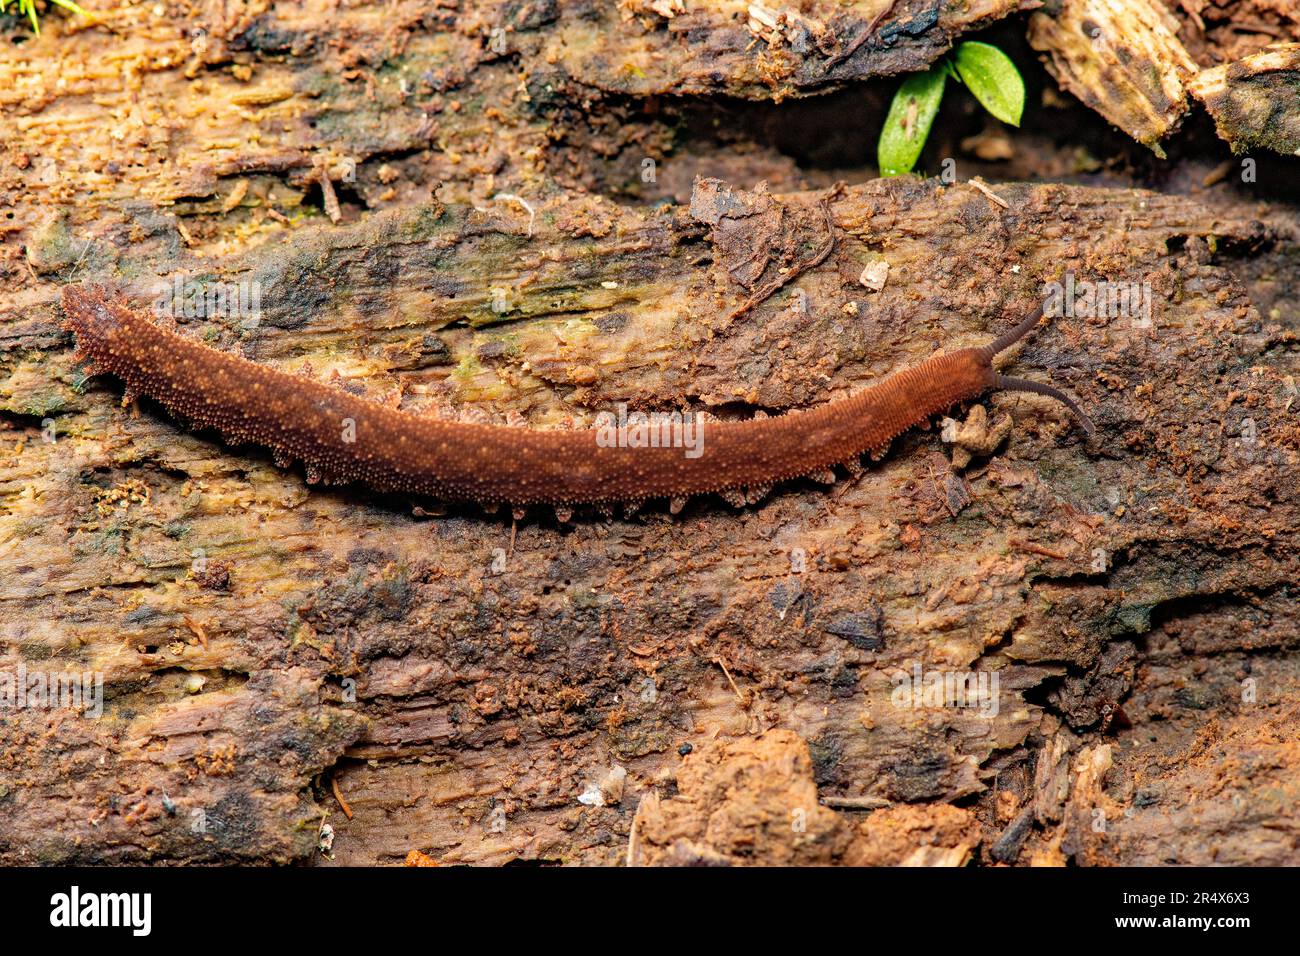 Velvet worm Epiperipatus sp. (Phylum Onycohophora, family Peripatidae) from Boca Tapada, Costa Rica, about 3 cm long. Stock Photo